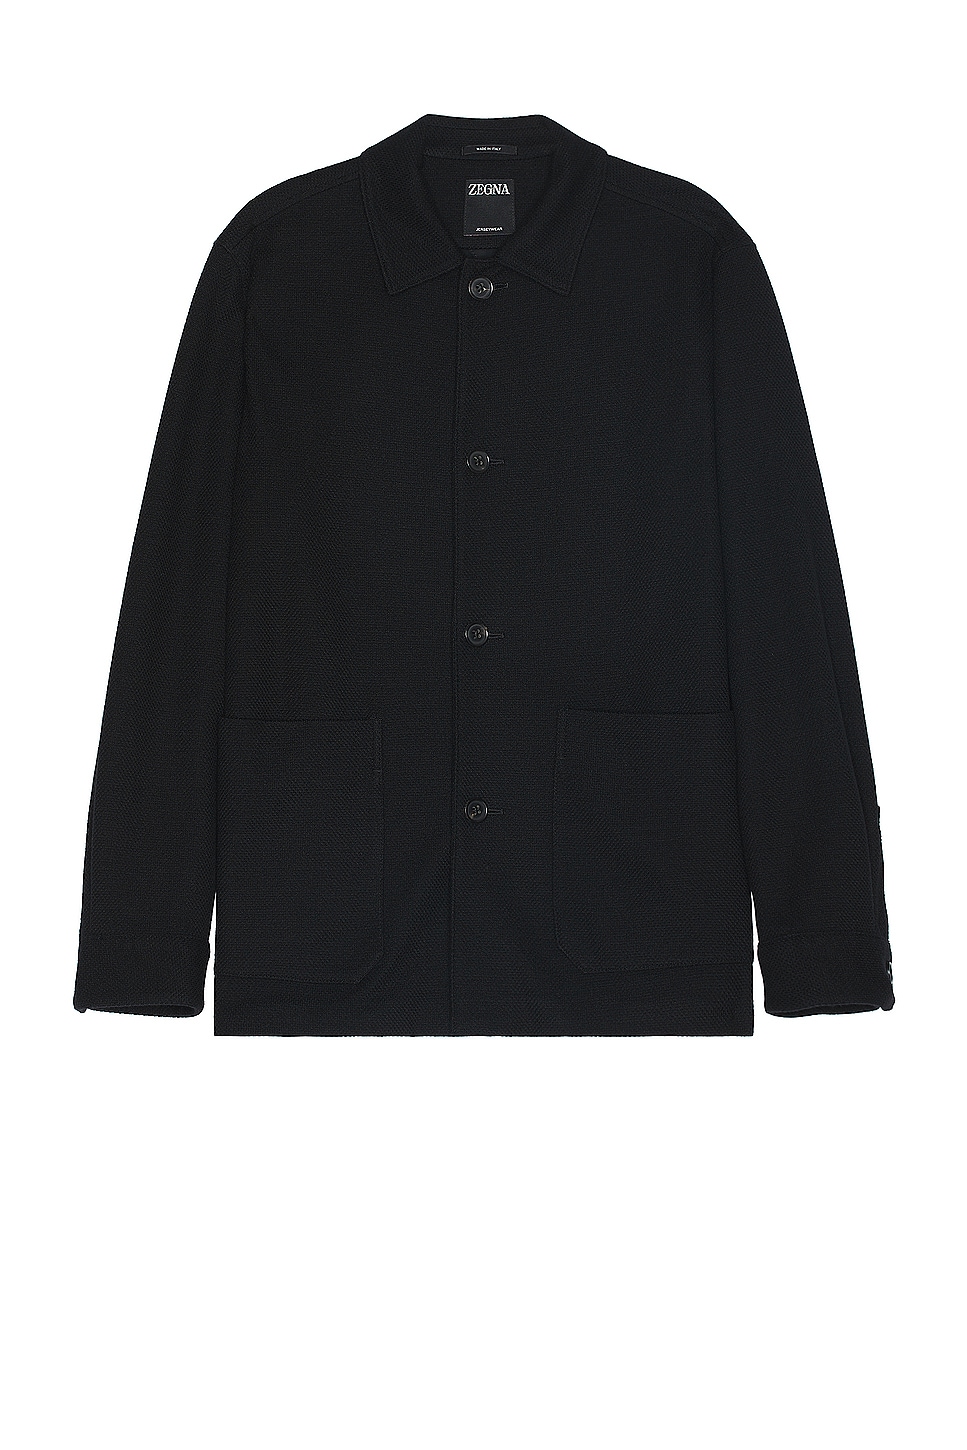 Cashmere Blend Chore Jacket in Black